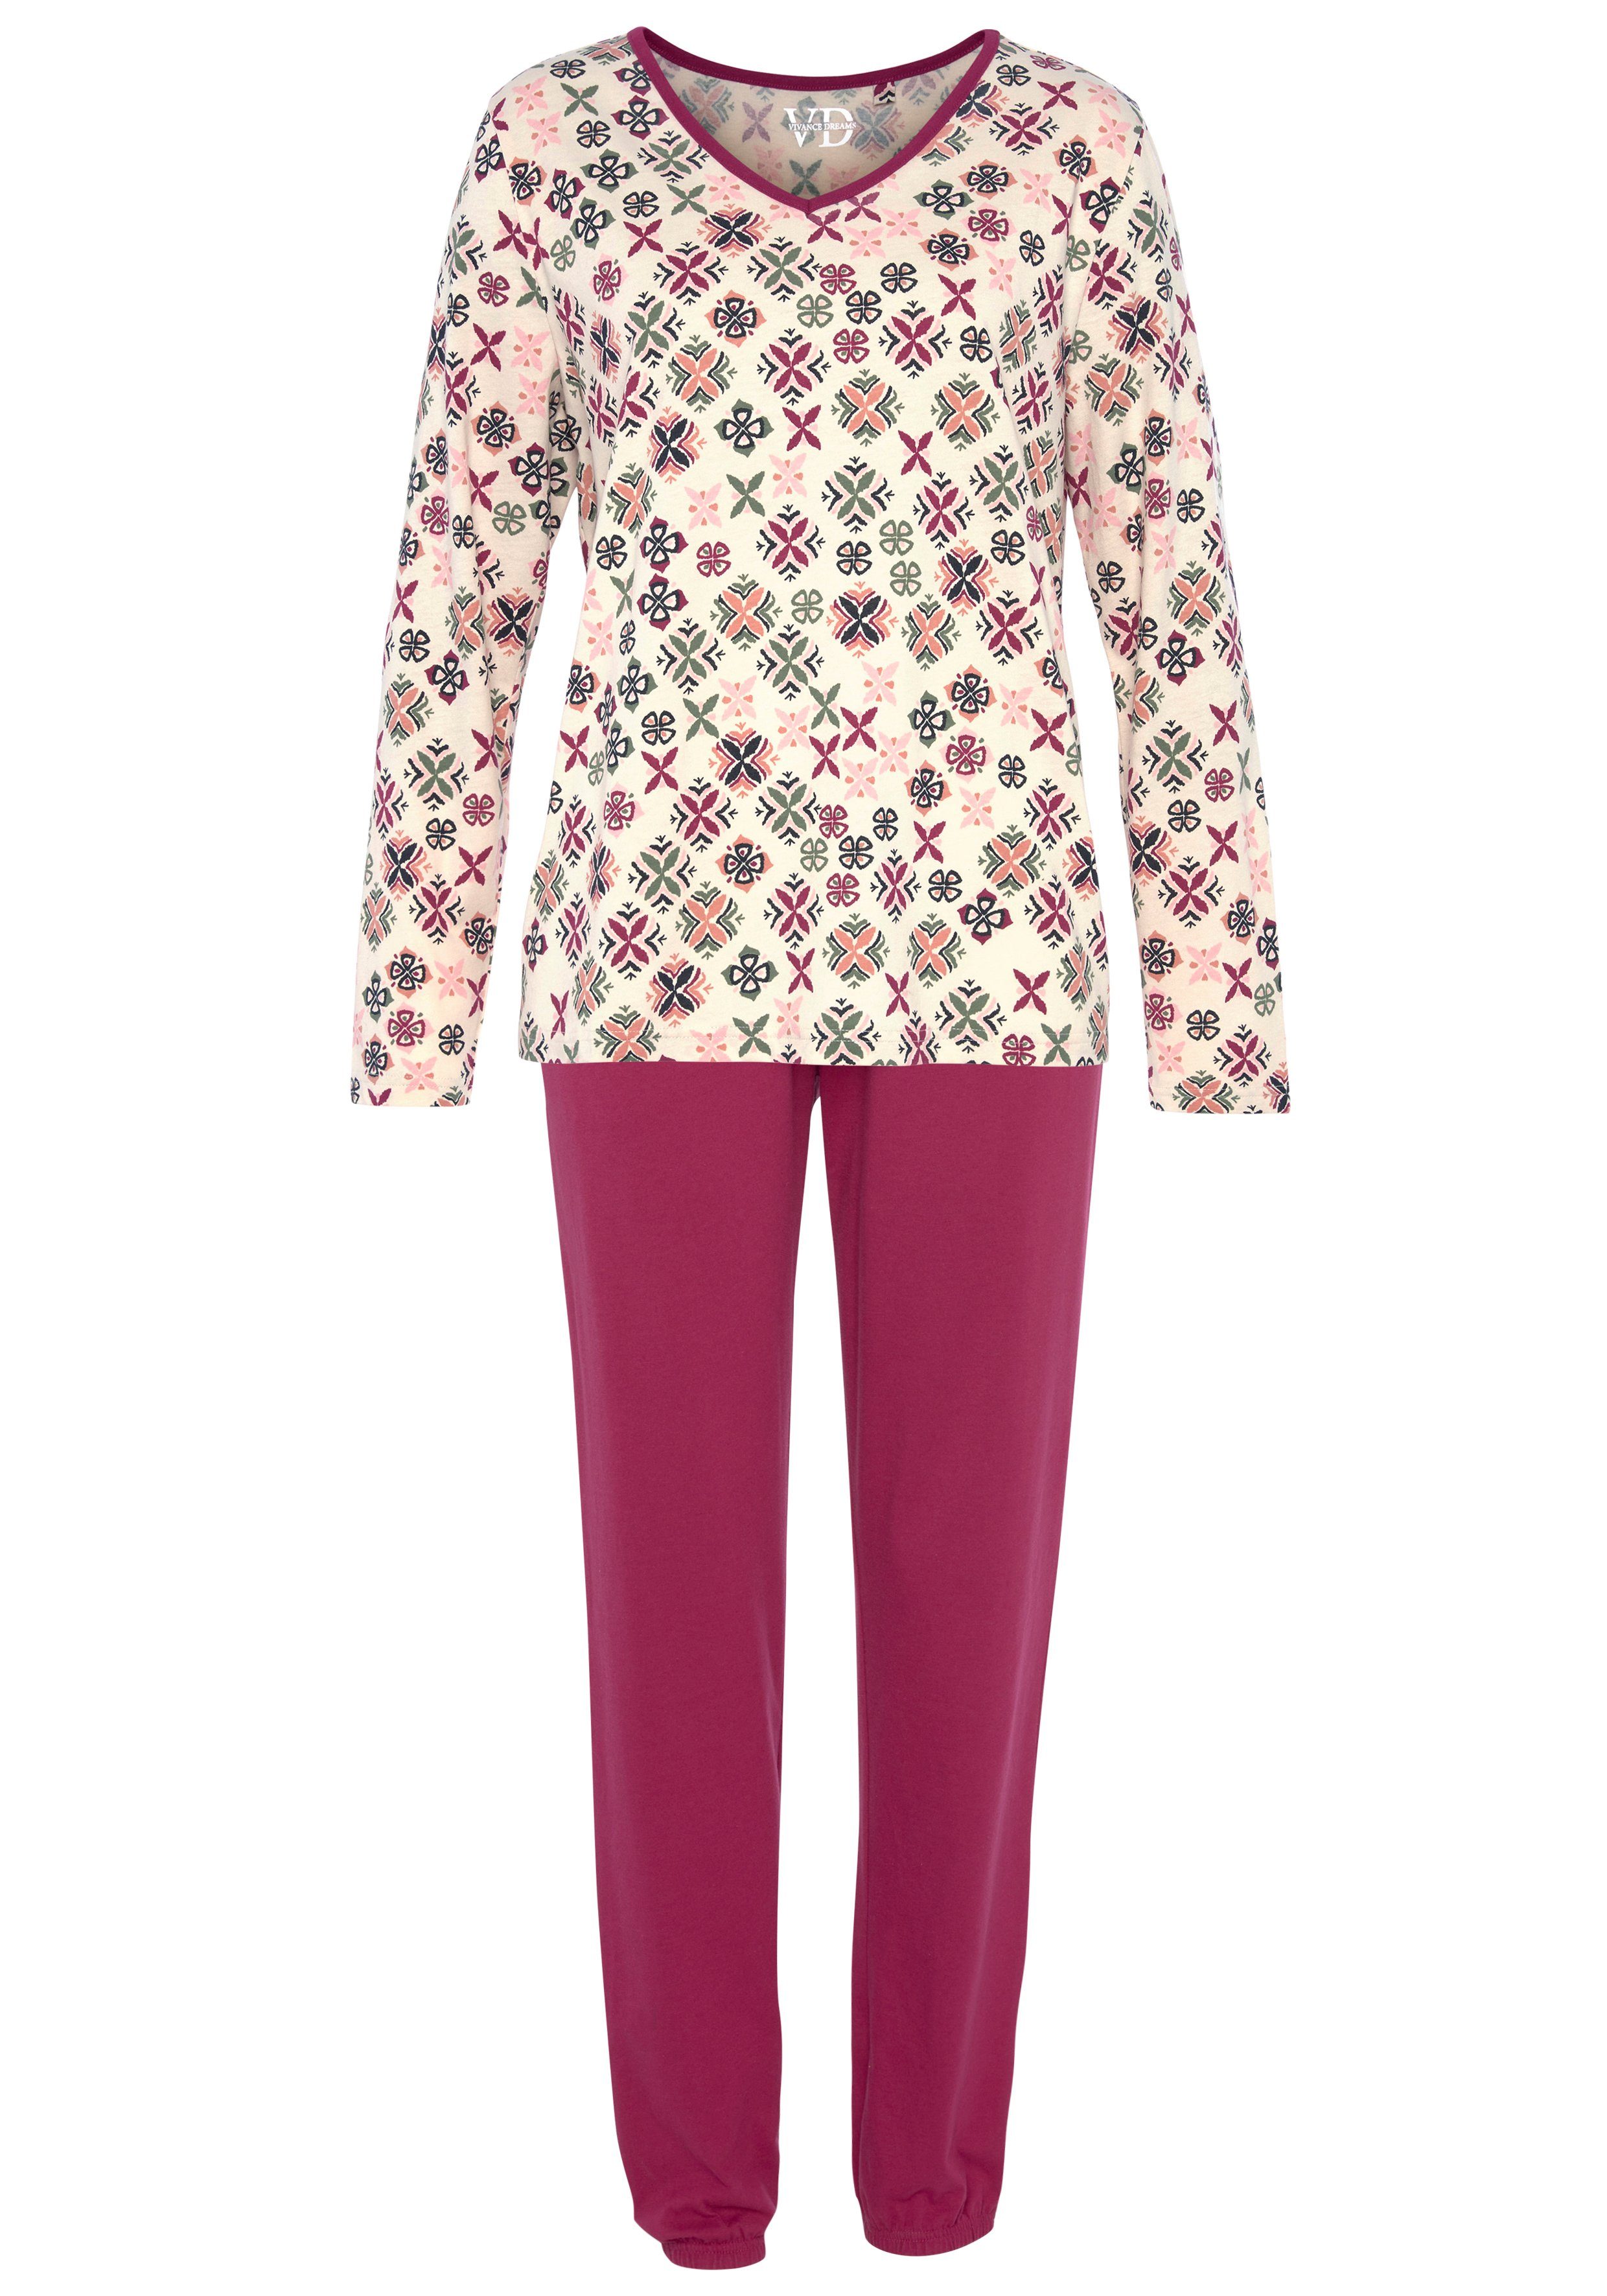 Dreams Vivance mit 2 tlg) (Packung, Alloverdruck grafisch-floralem burgunder-gemustert Pyjama